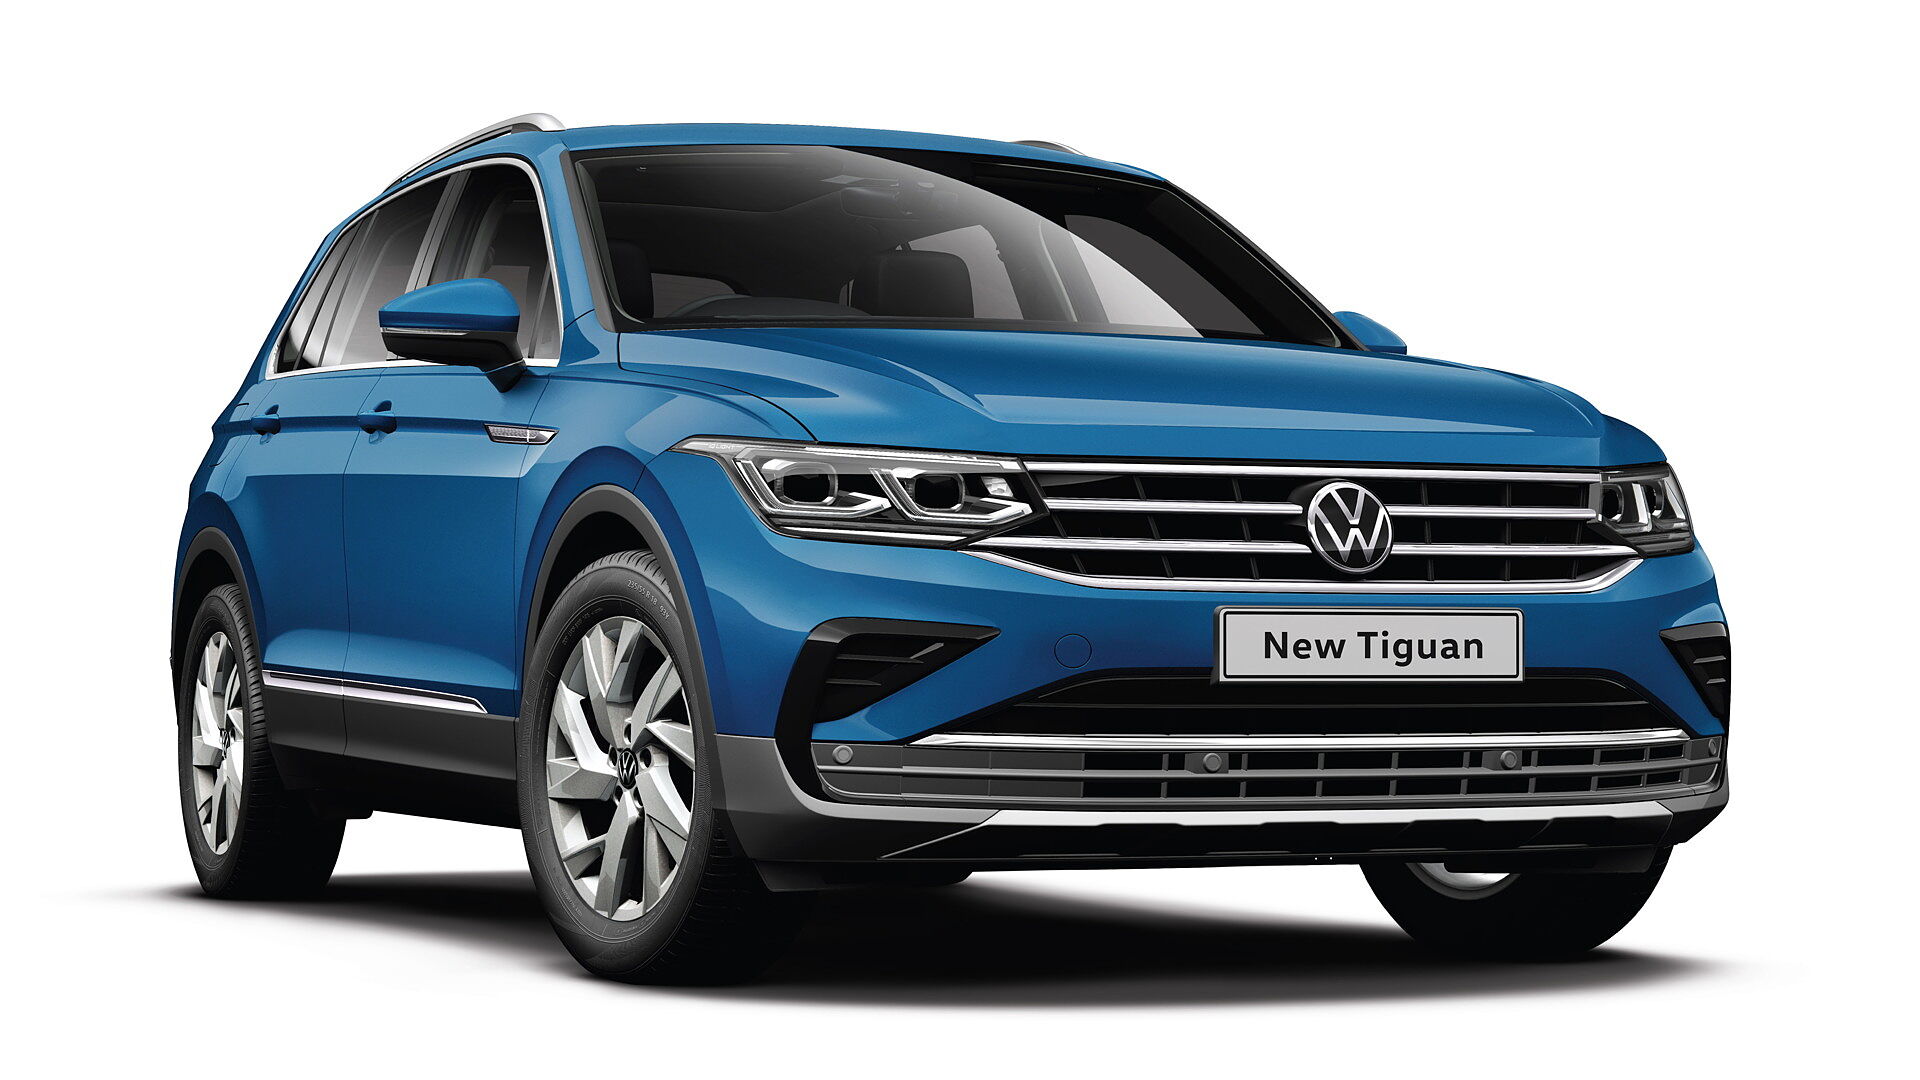 Volkswagen Tiguan price, exterior design leaked, interior